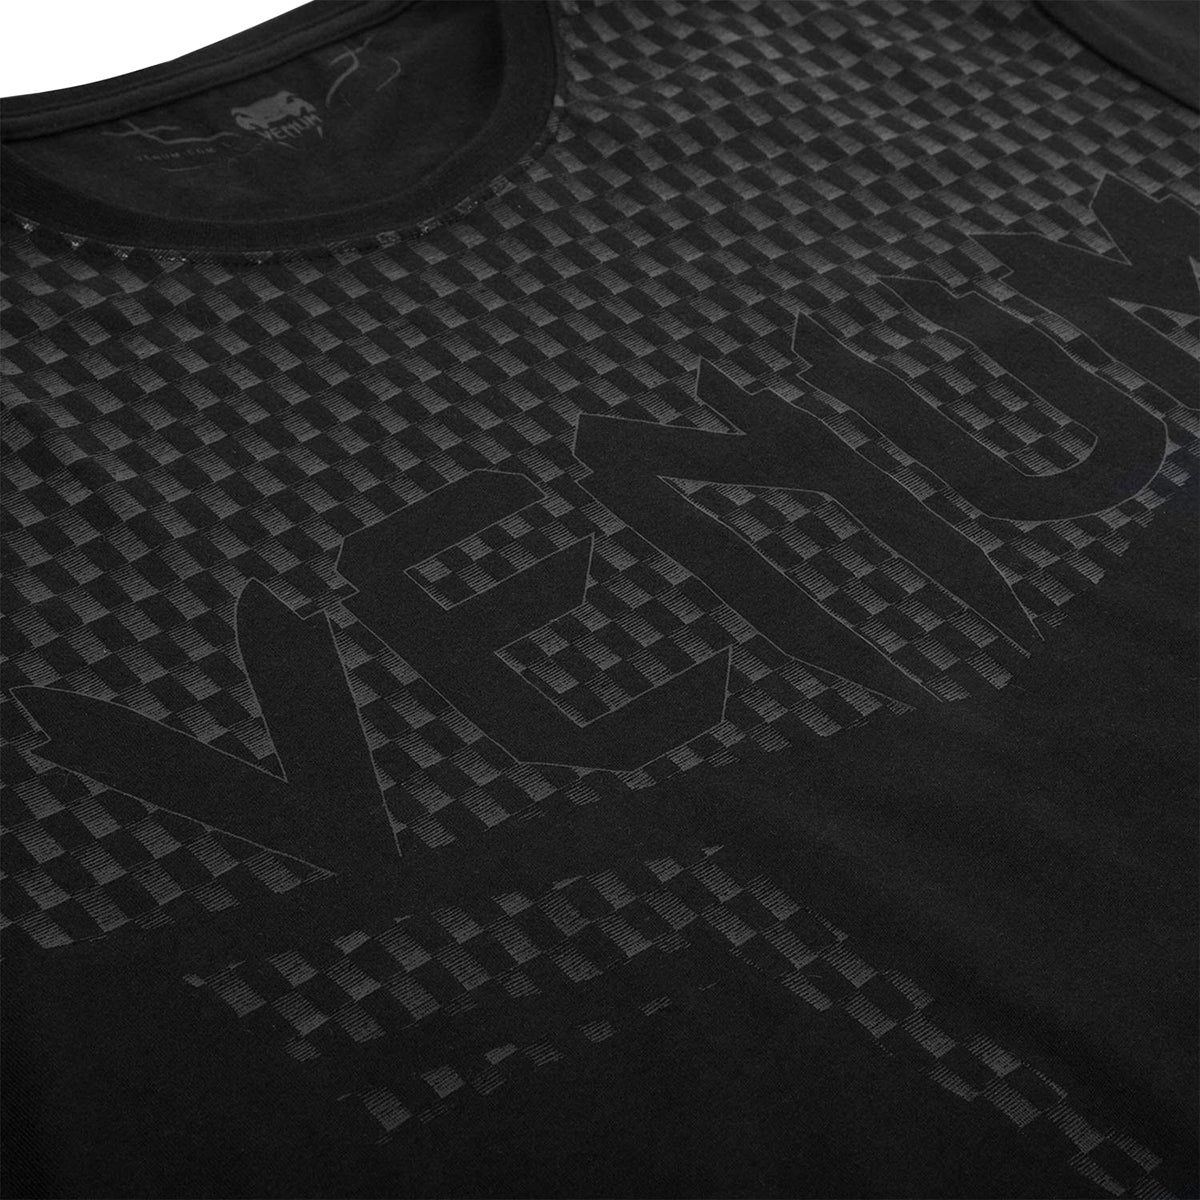 Venum Carbonix Athletic Fit T-Shirt - Black Venum